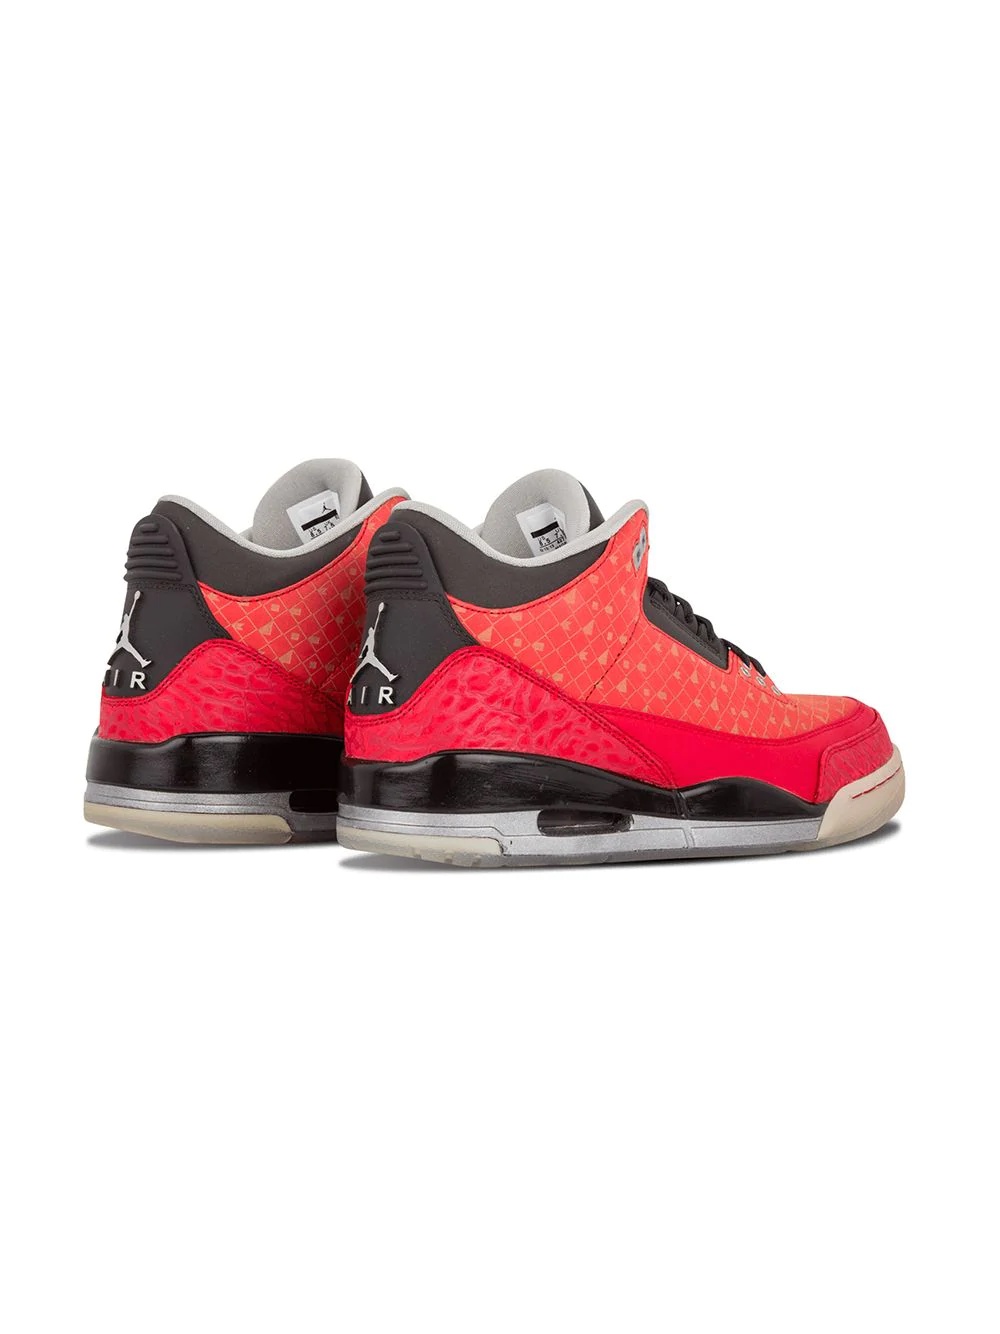 Air Jordan 3 Retro "Doernbecher" sneakers - 3